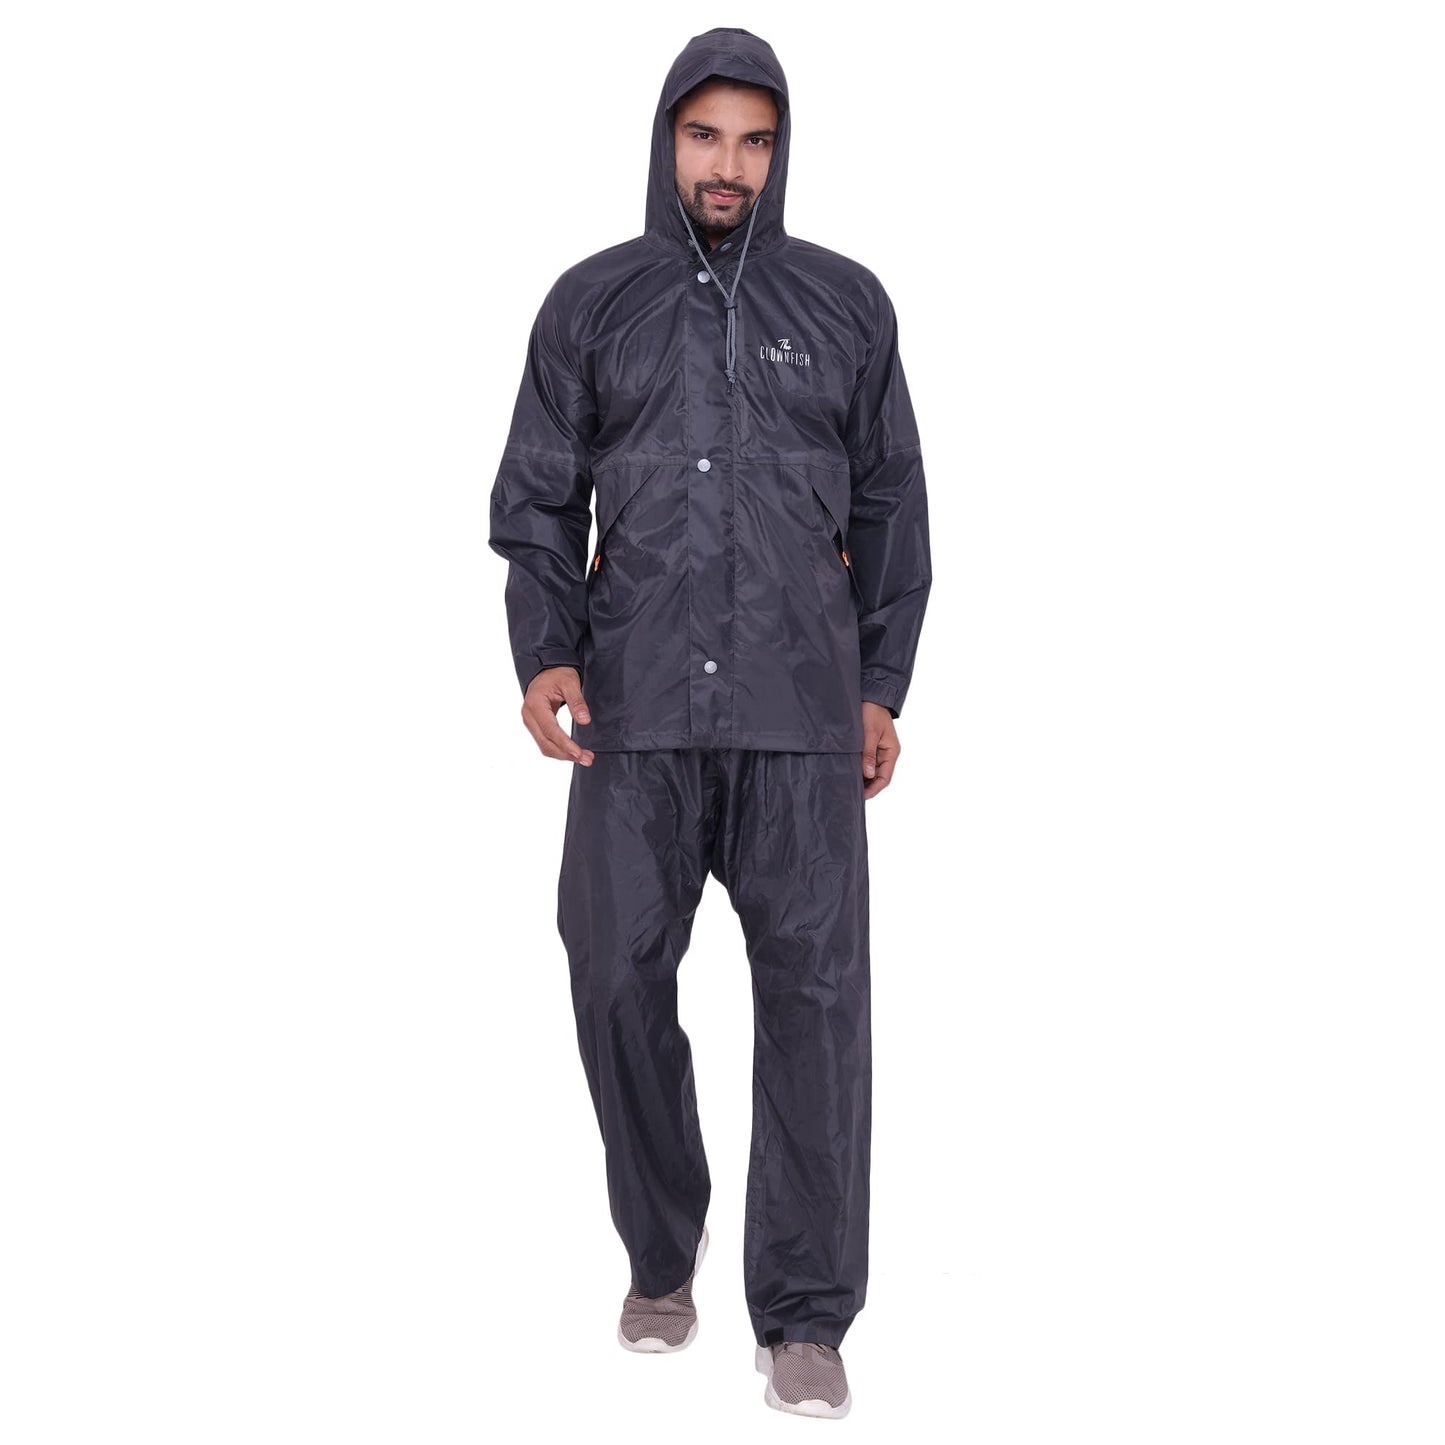 THE CLOWNFISH Men's Solid Raincoat (BQ-121_Classic Grey_XL)